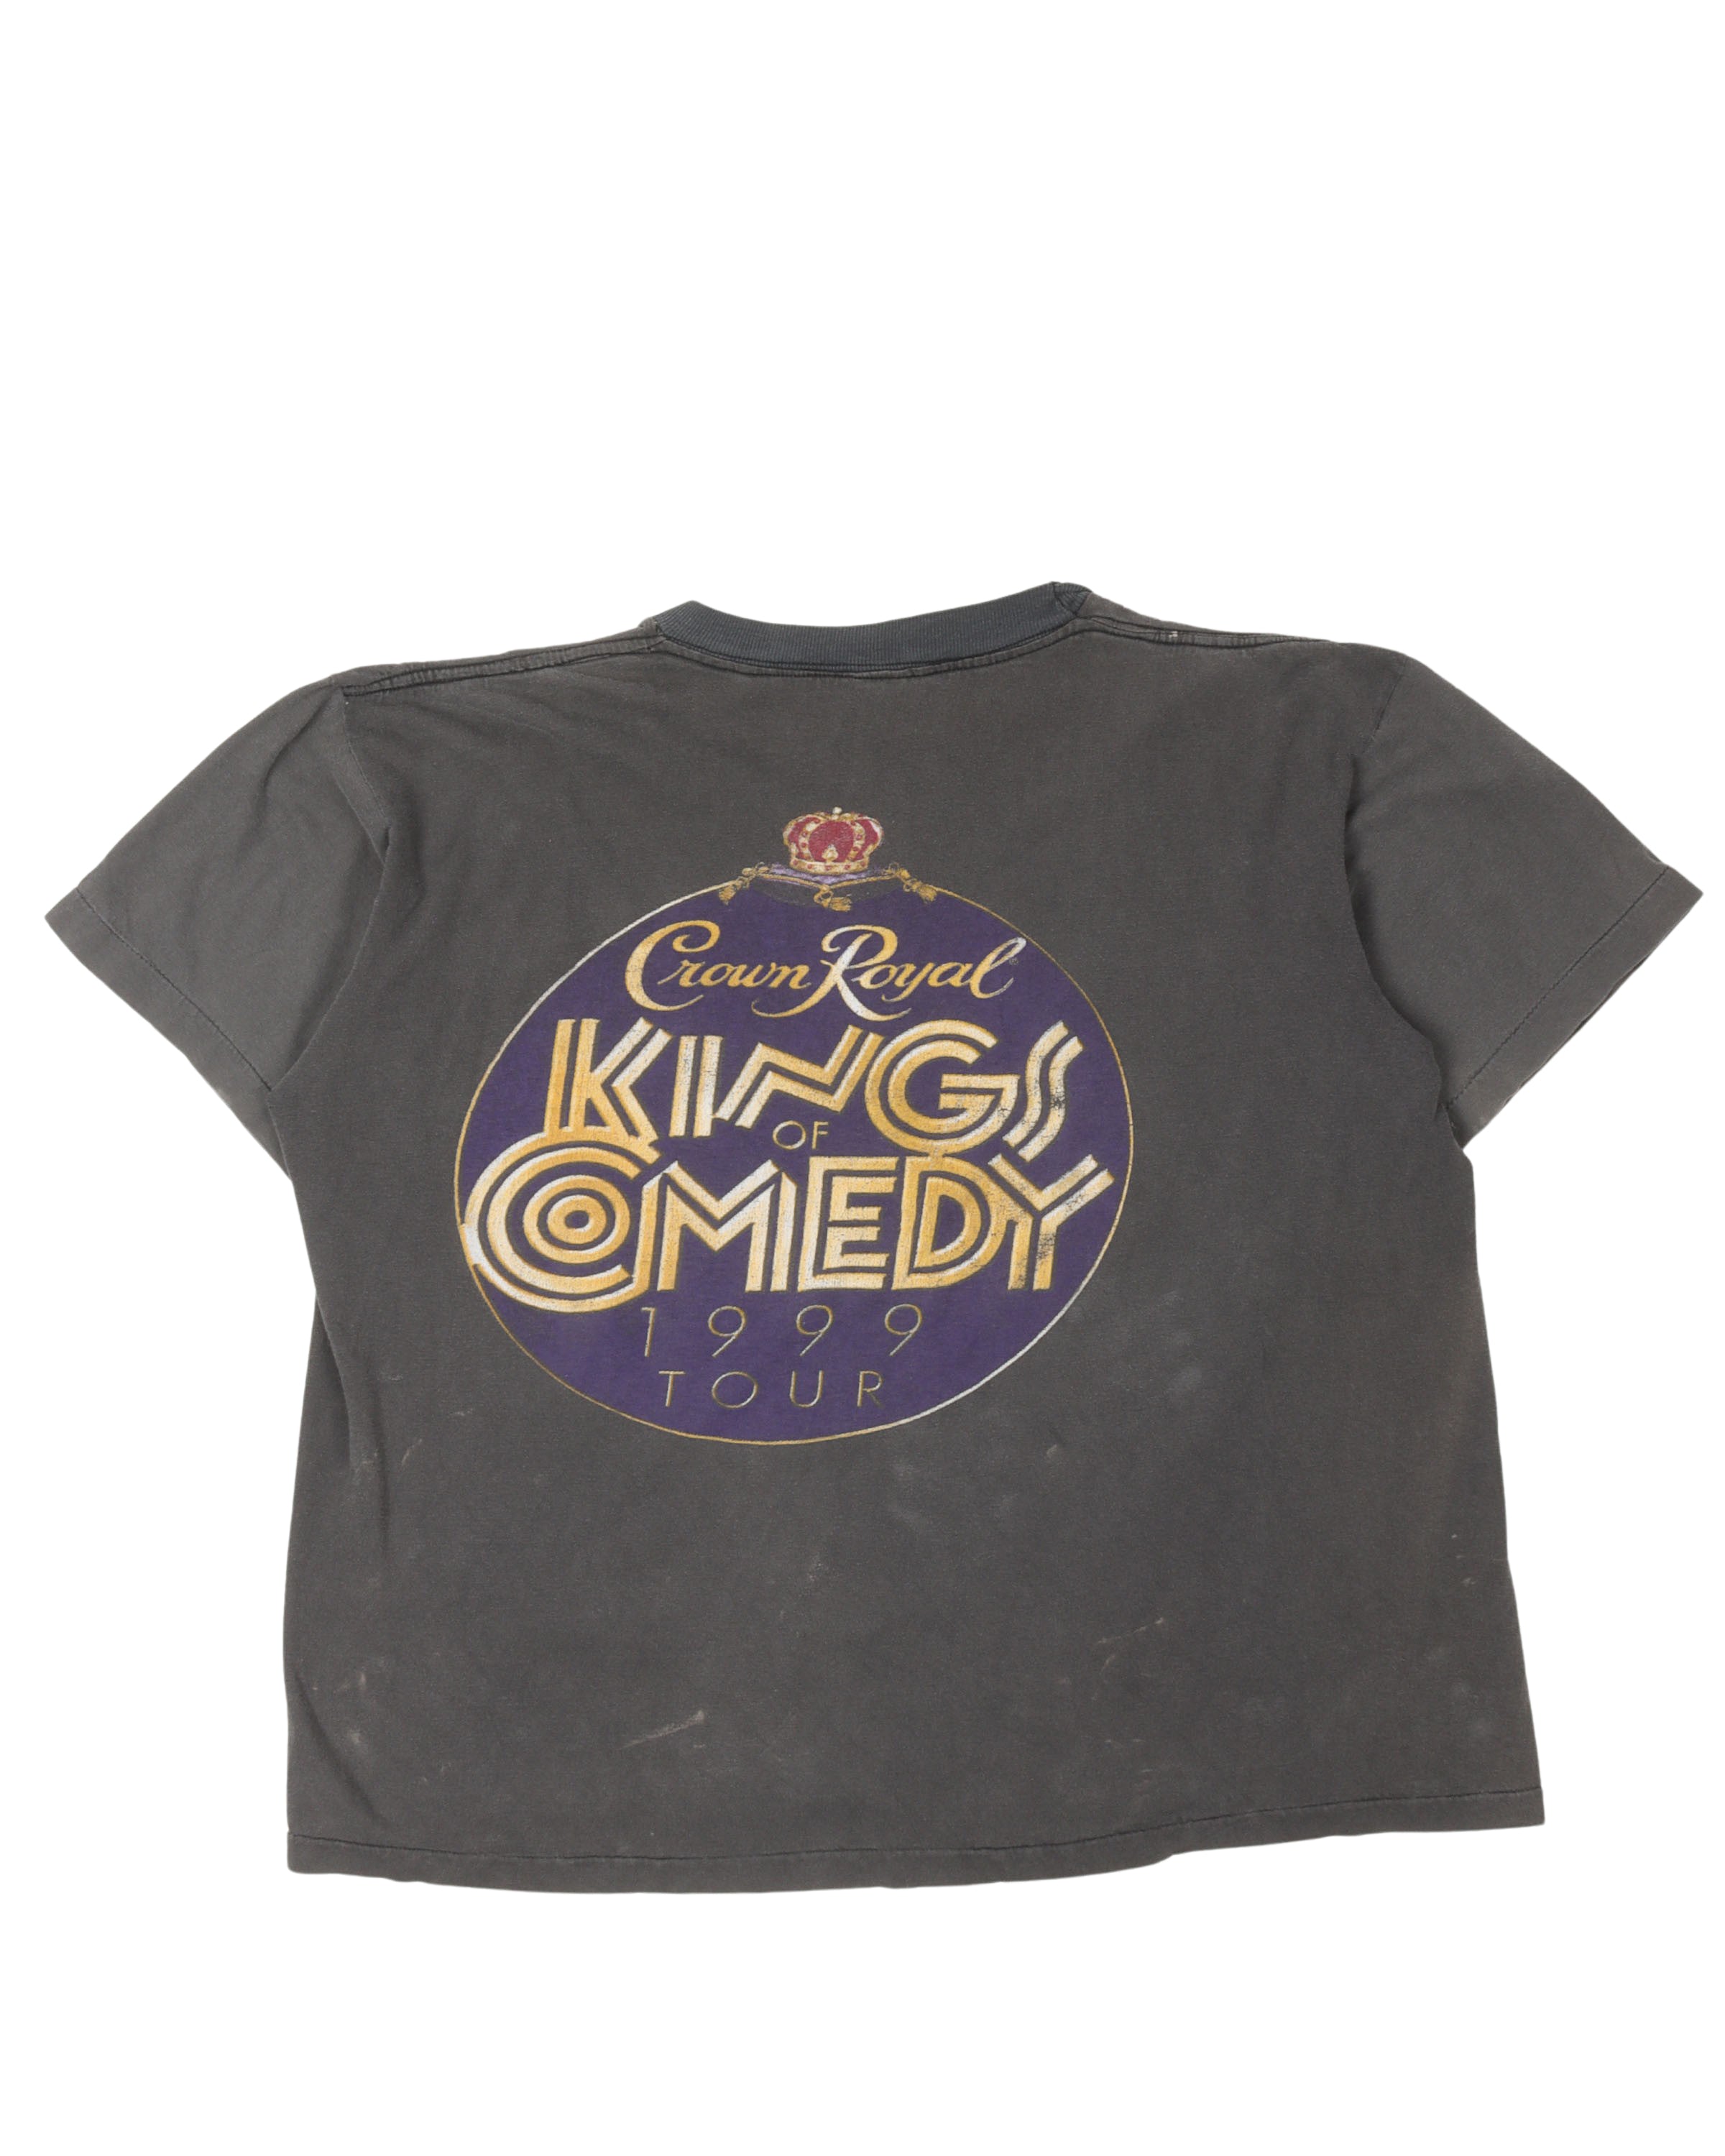 Crown Royal Kings of Comedy 1999 T-Shirt